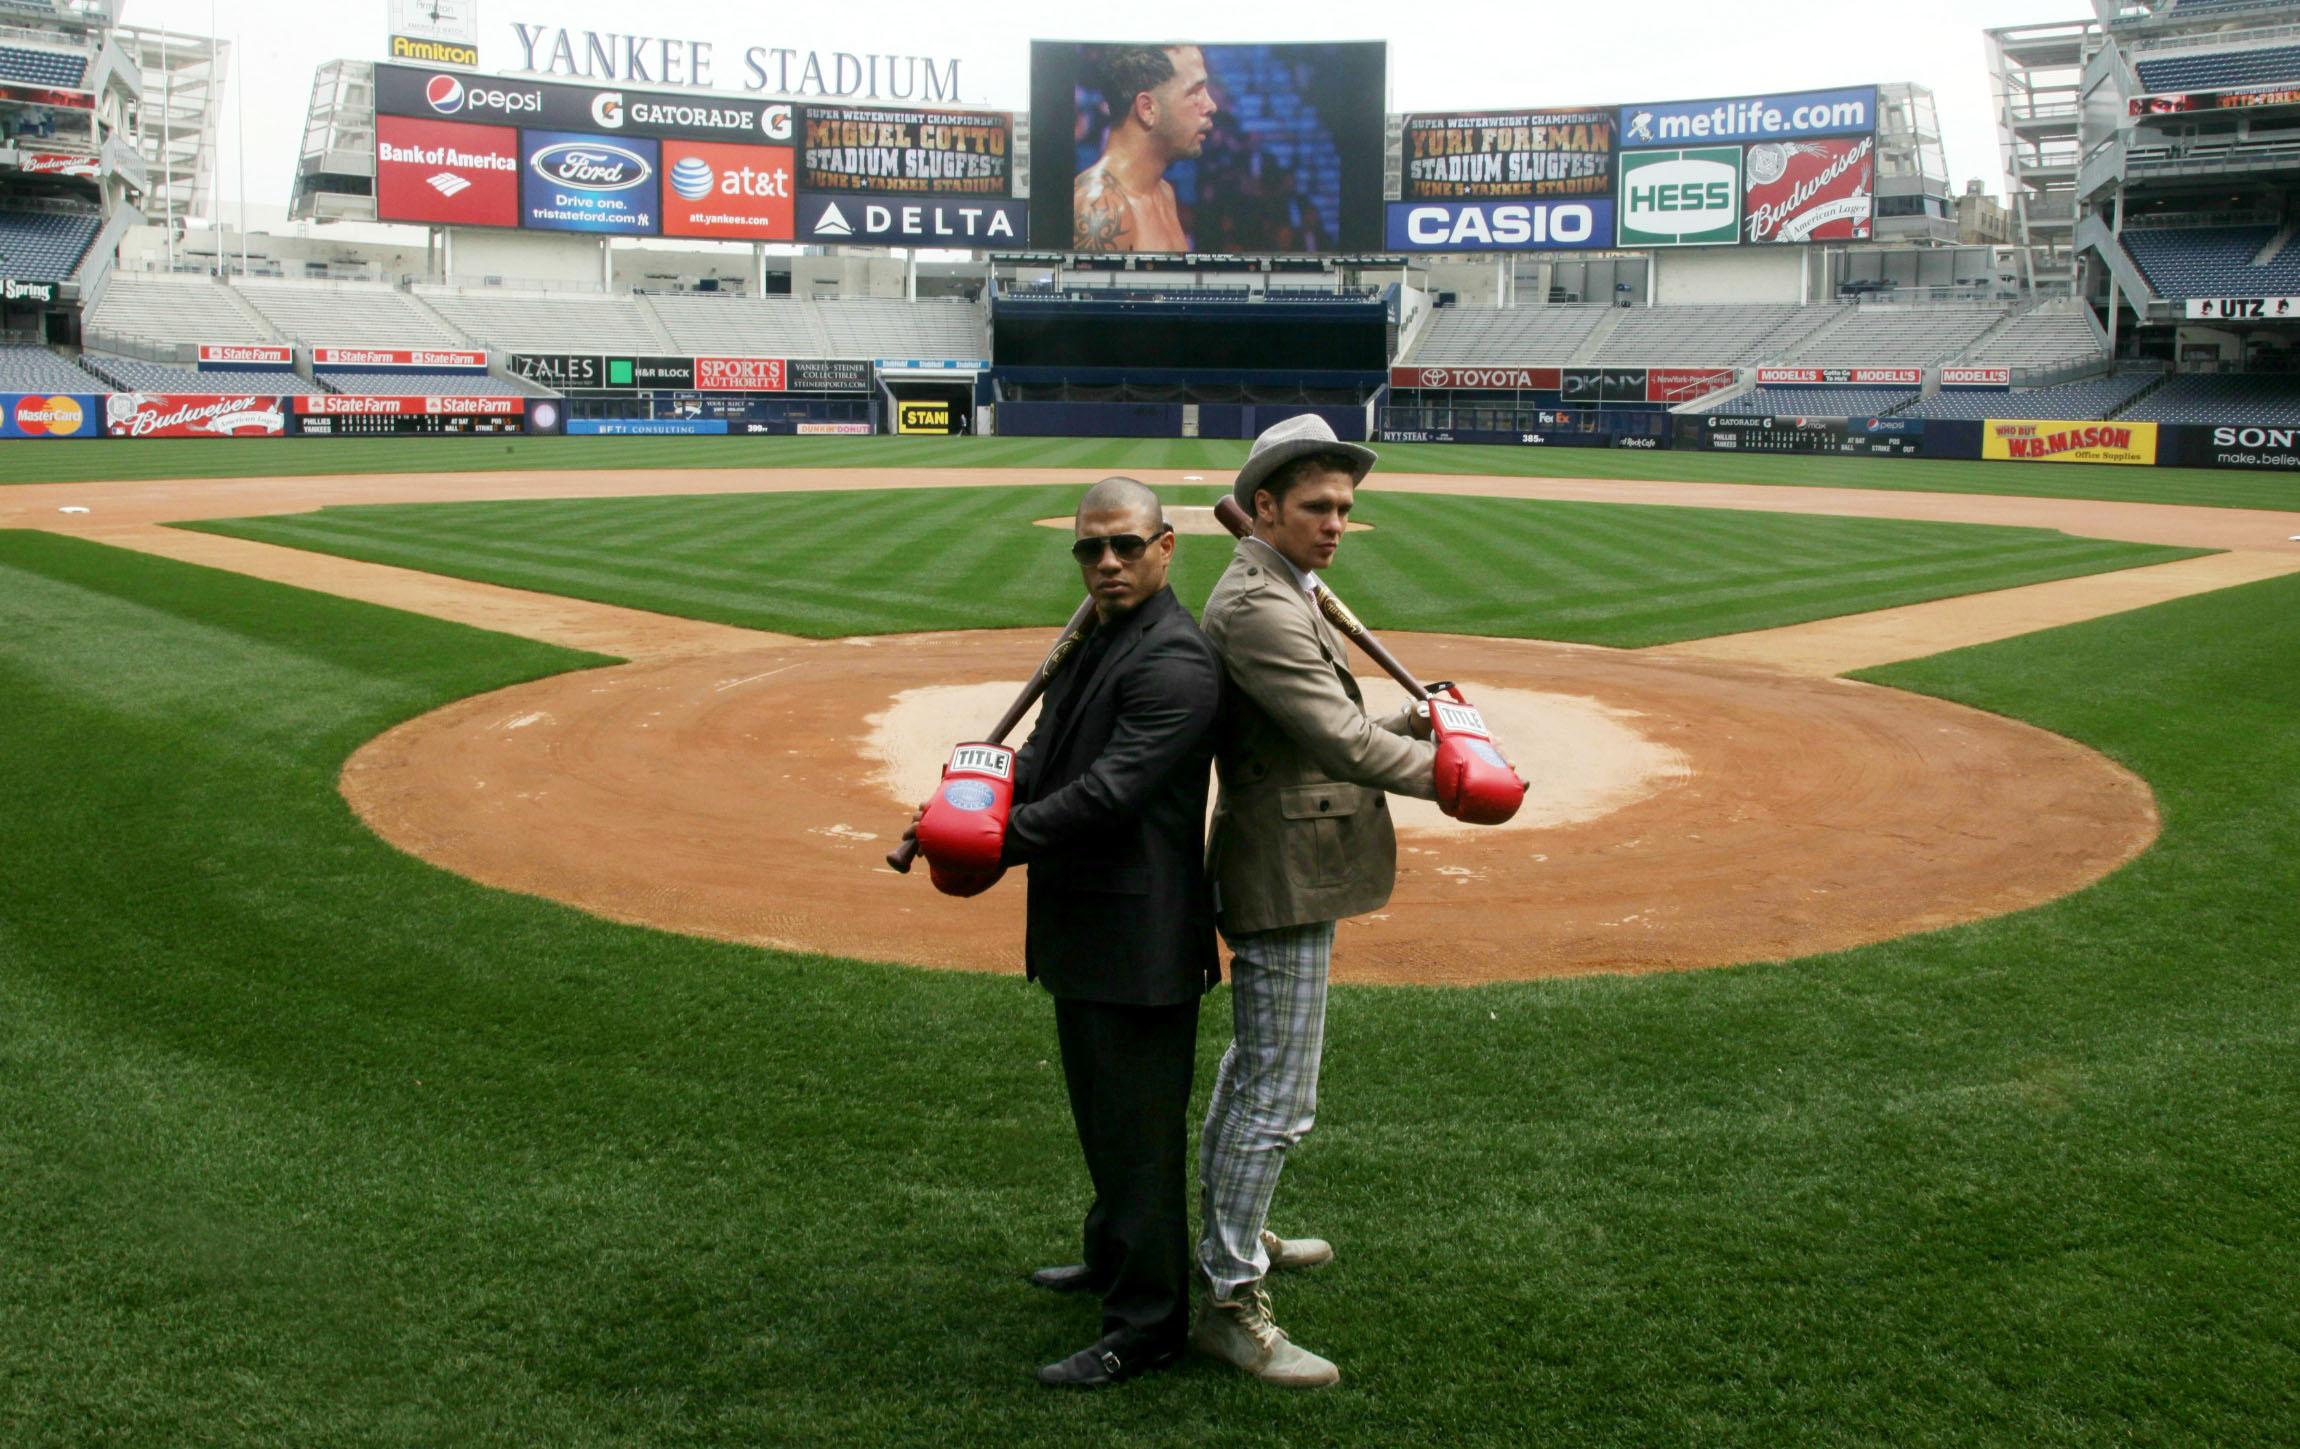 New York, Miguel Cotto, Yuri Foreman, Yankee Stadium, boxning